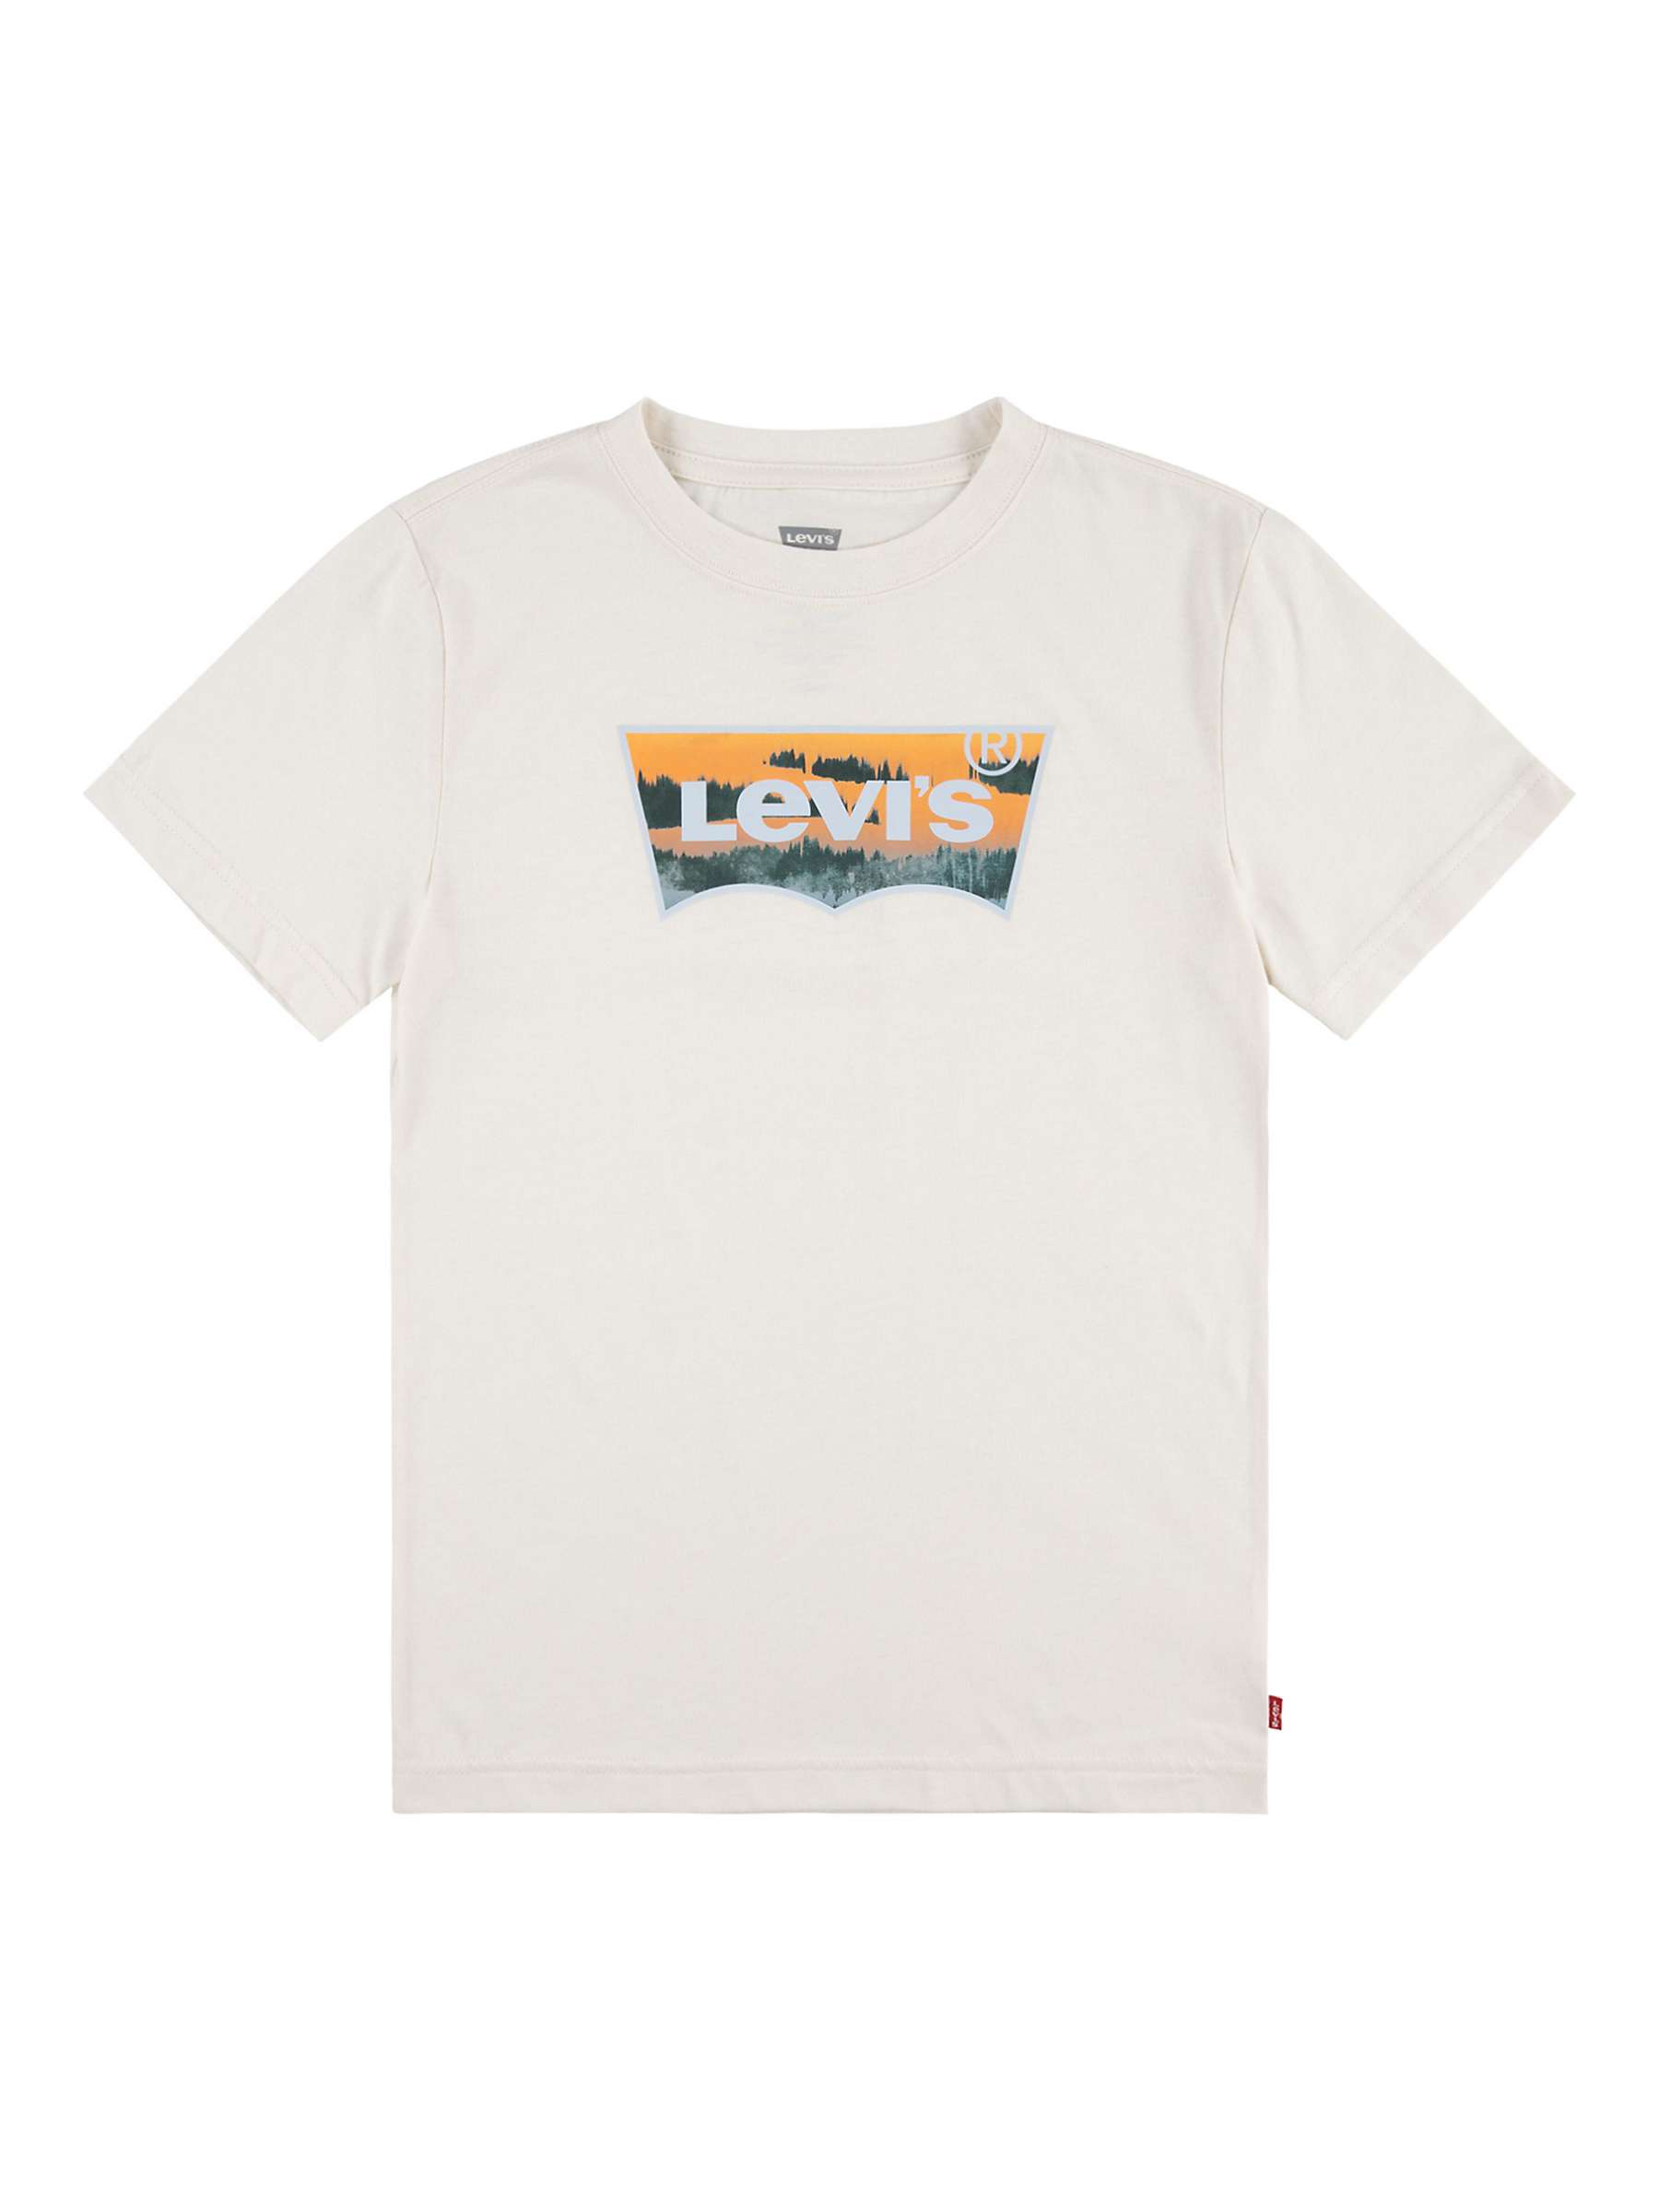 Buy Levi's Kids' Graphic Batwing Logo T-Shirt, Birch Online at johnlewis.com